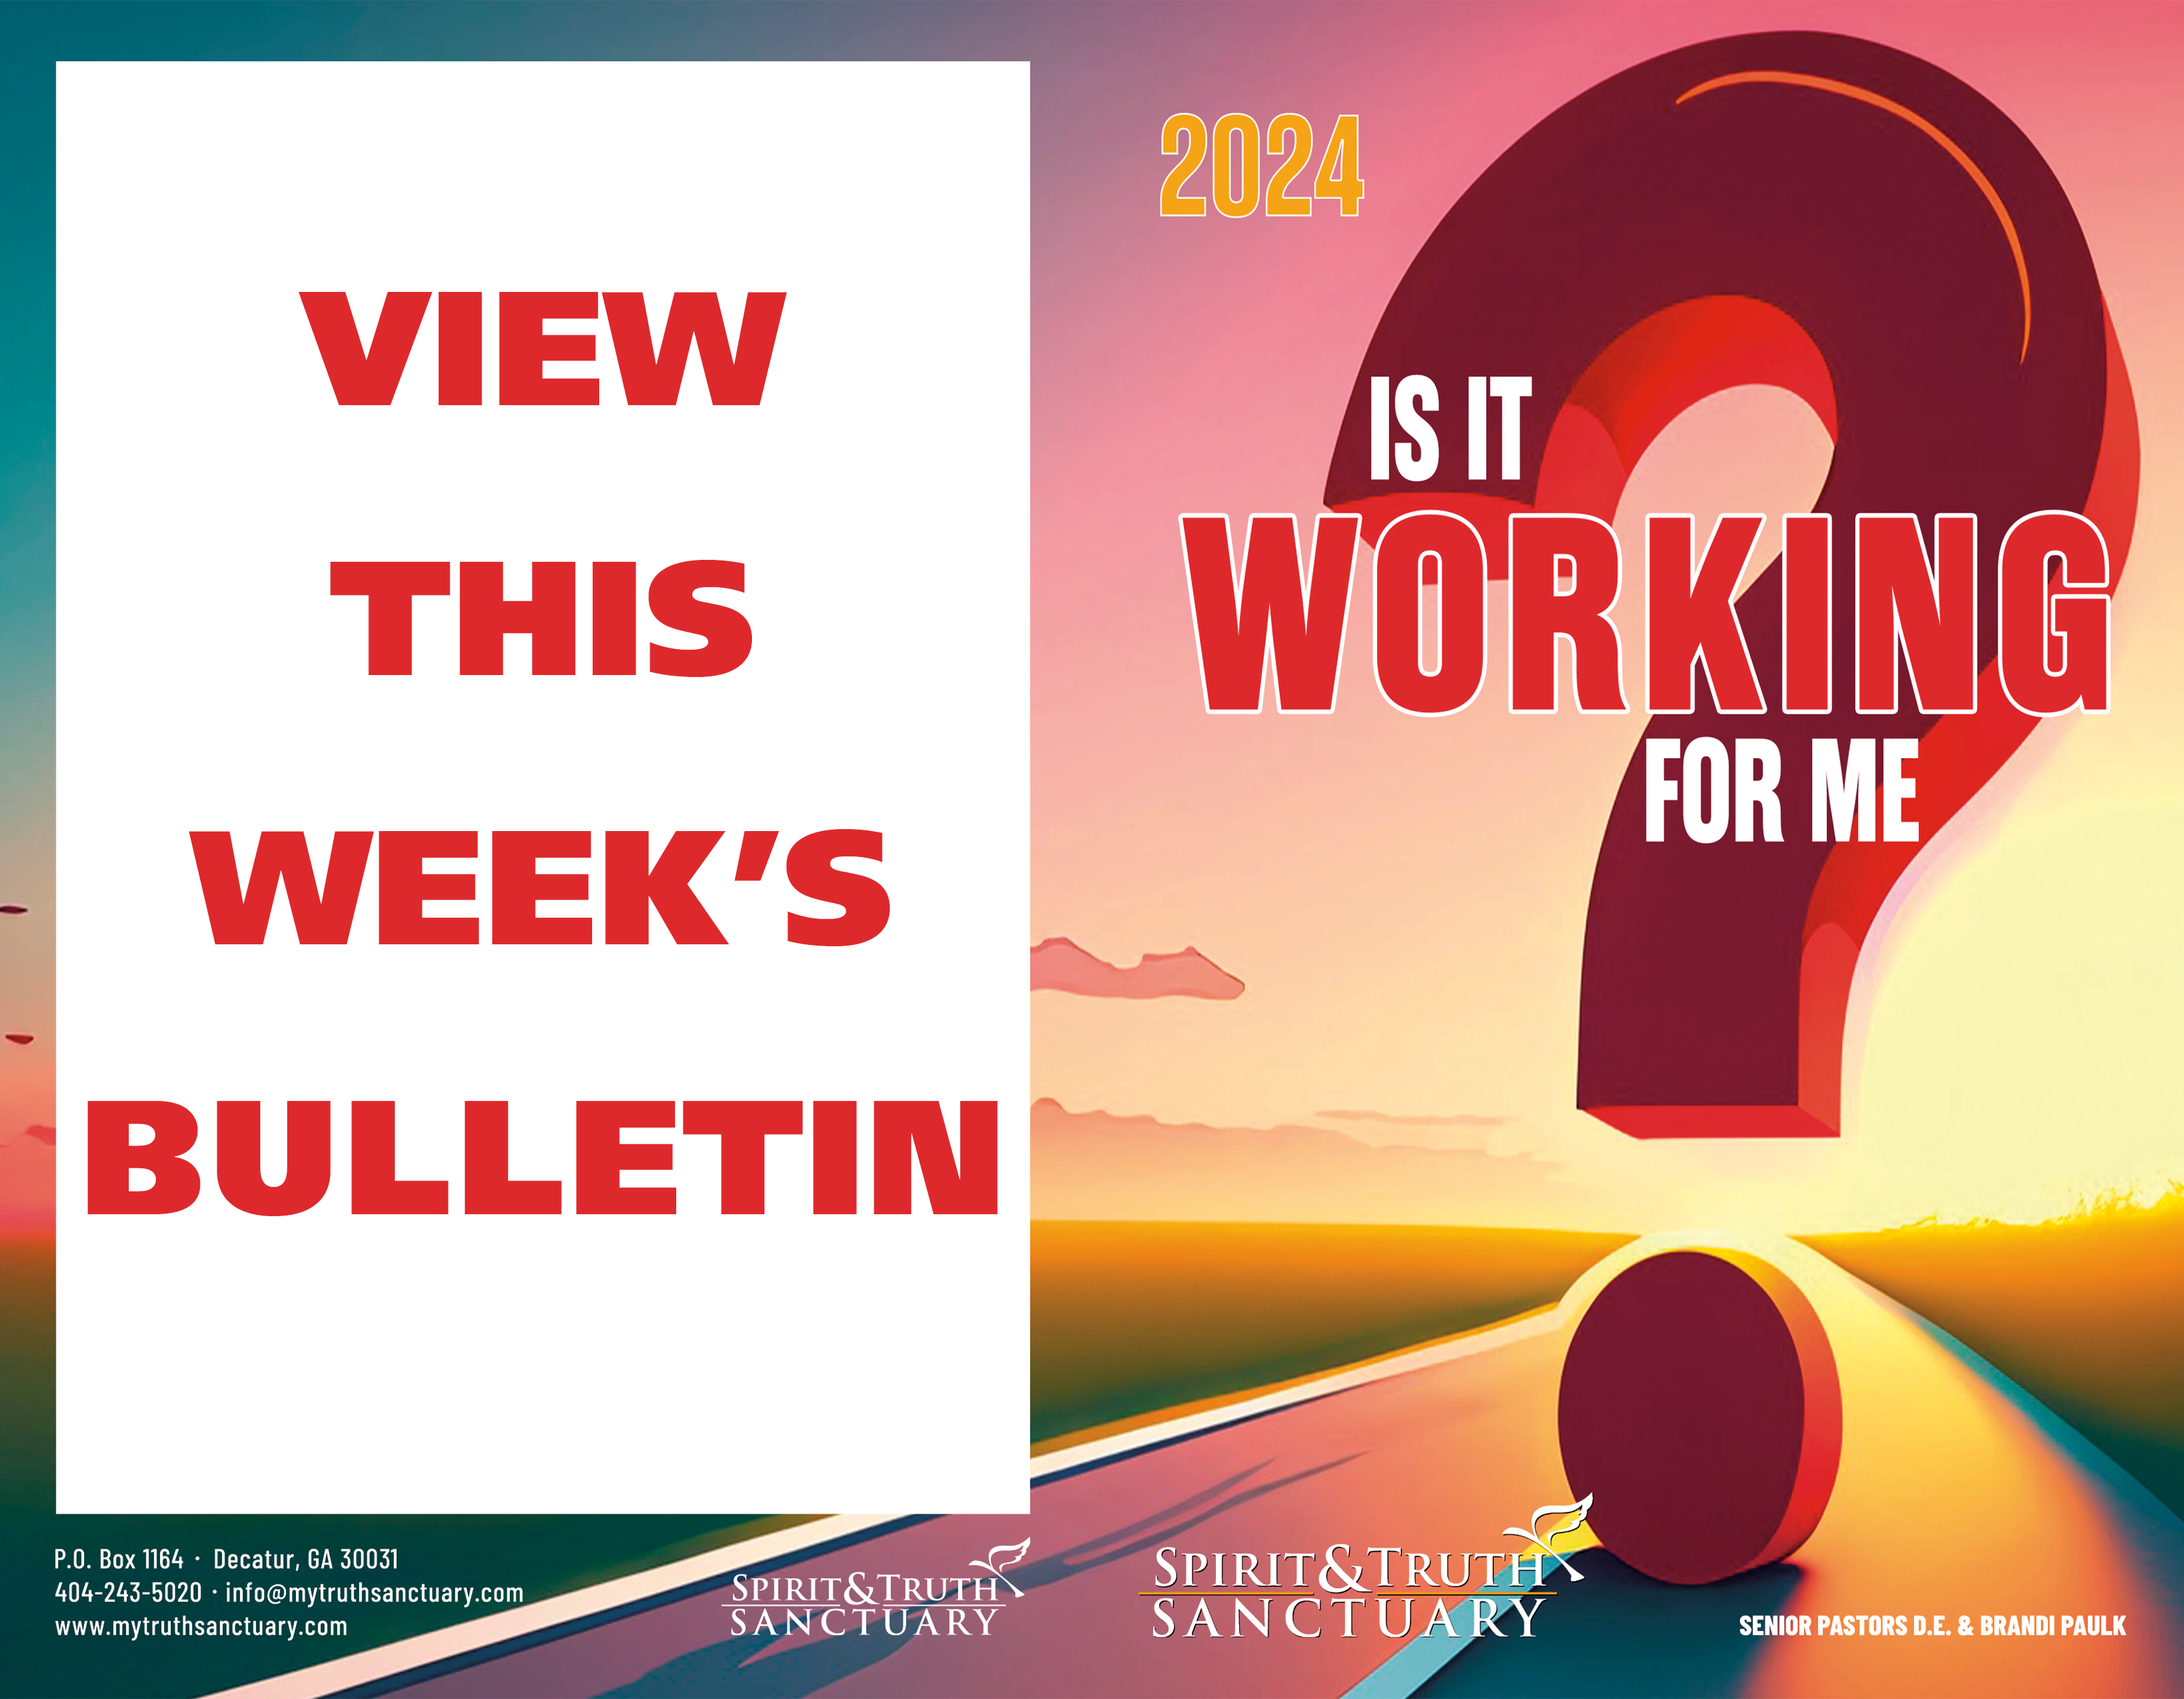 View This Week's Bulletin